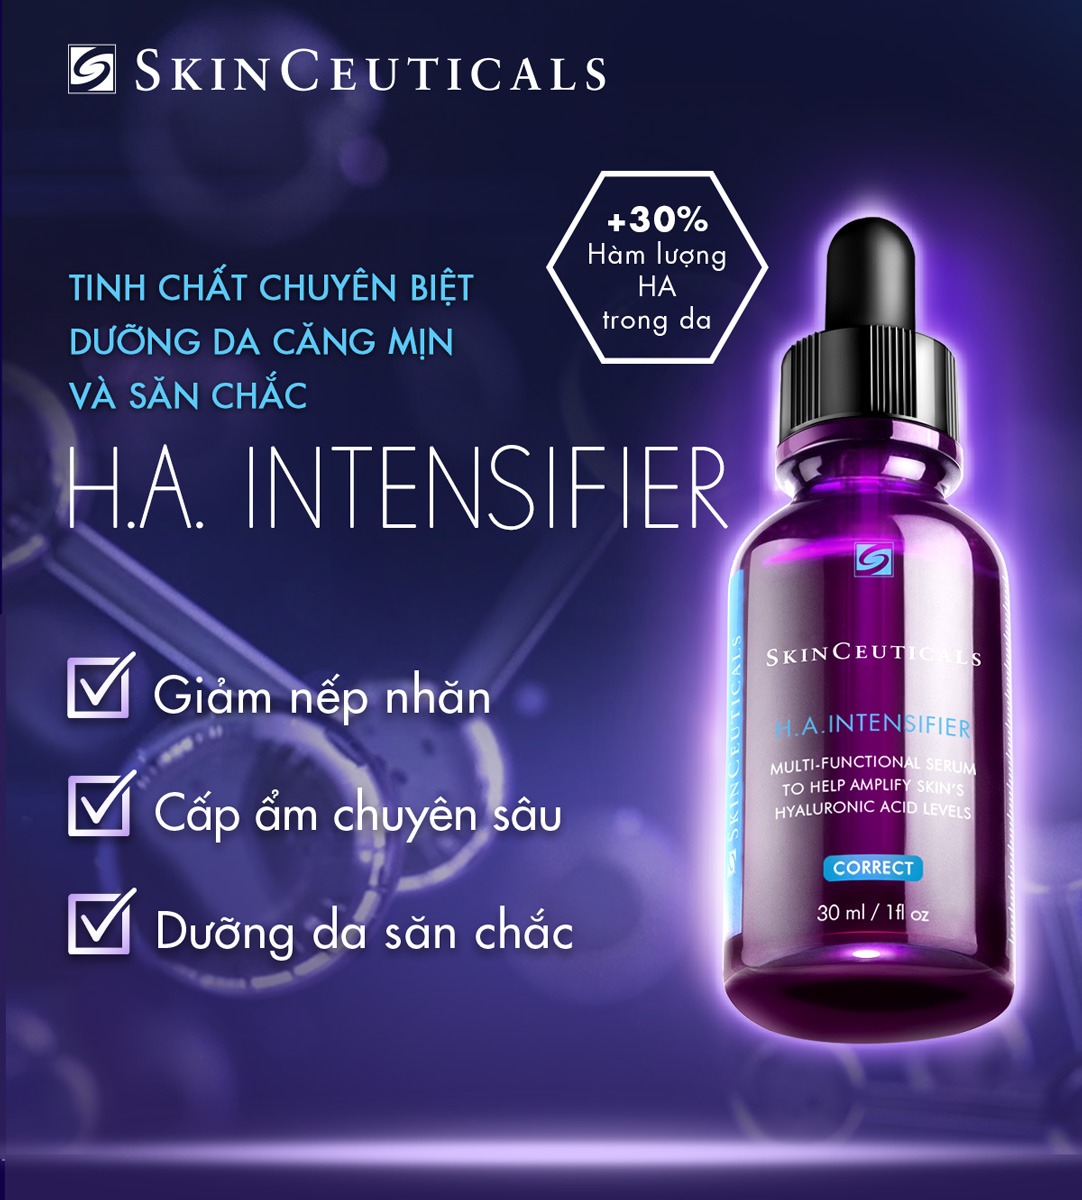 Serum SkinCeuticals H.A. Intensifier